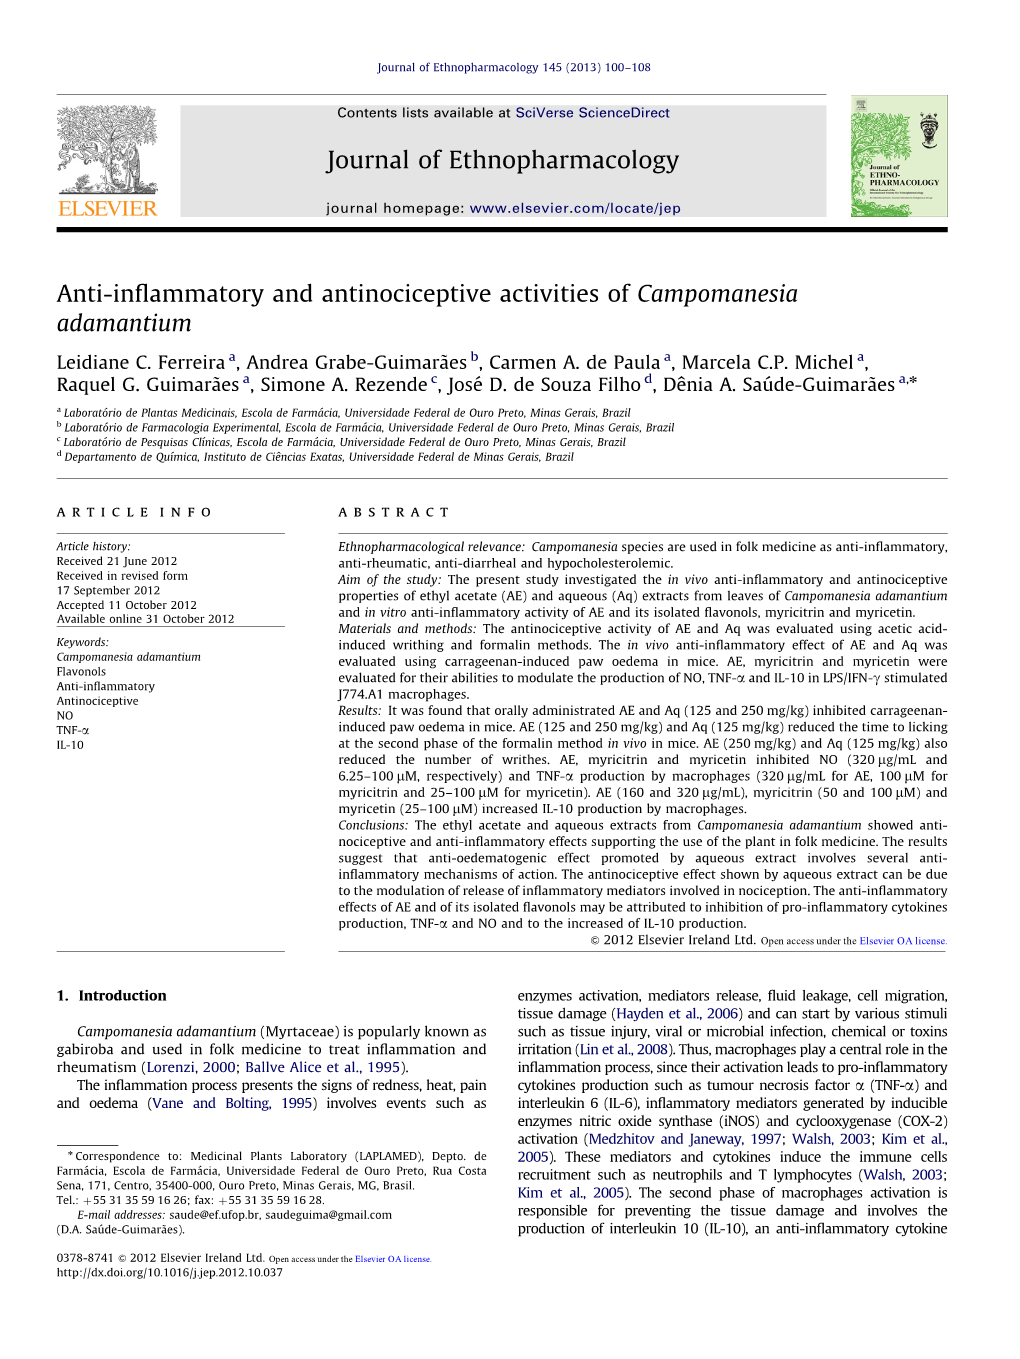 Anti-Inflammatory and Antinociceptive Activities of Campomanesia